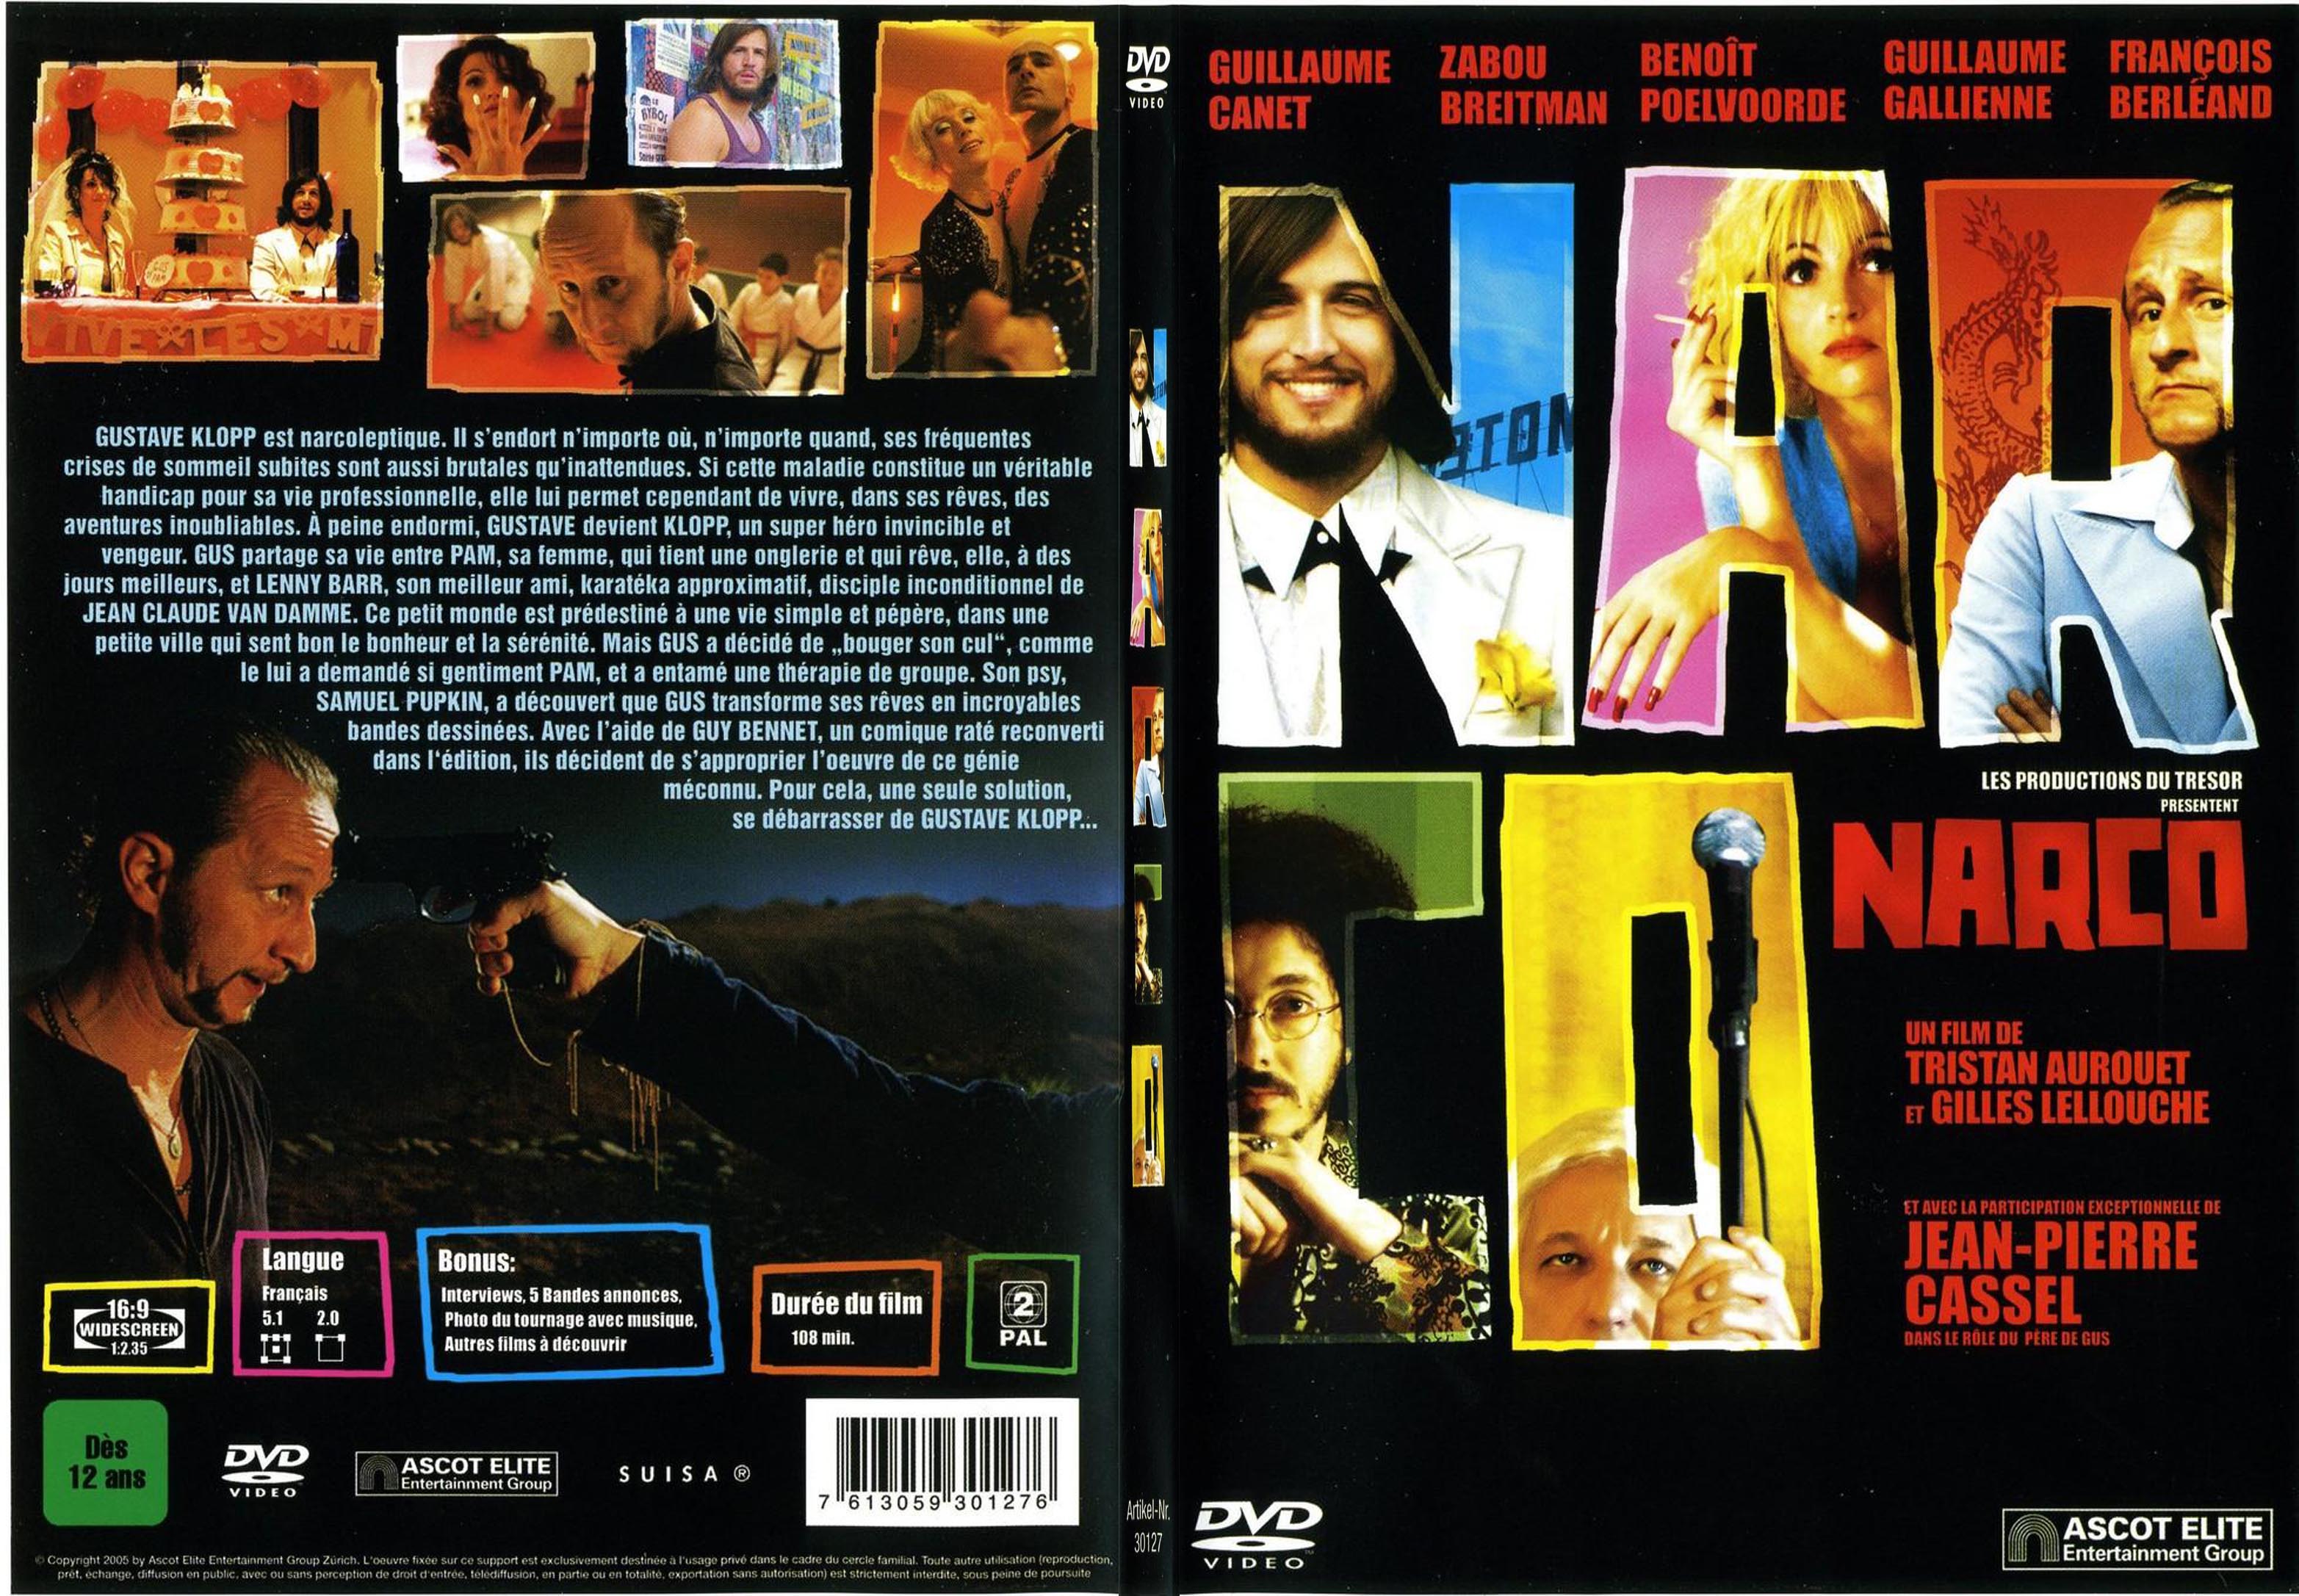 Jaquette DVD Narco - SLIM